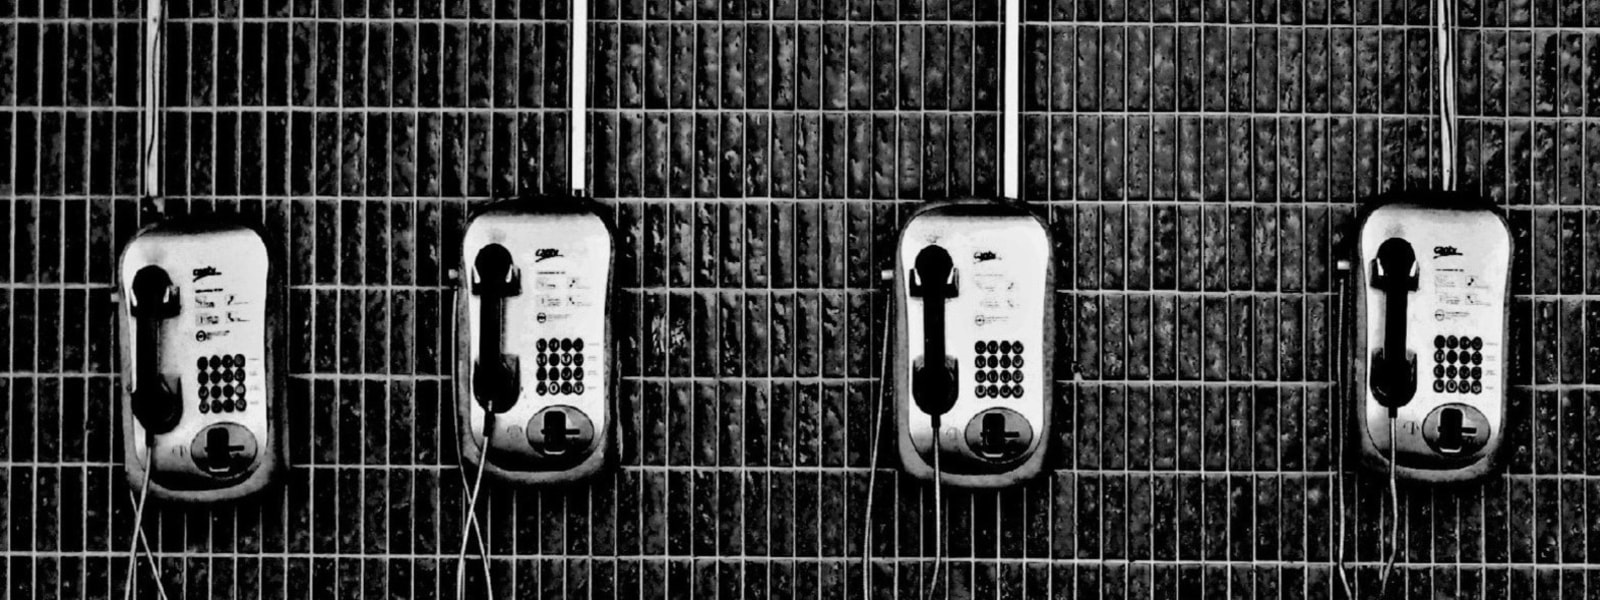 4 phones hanging in a line